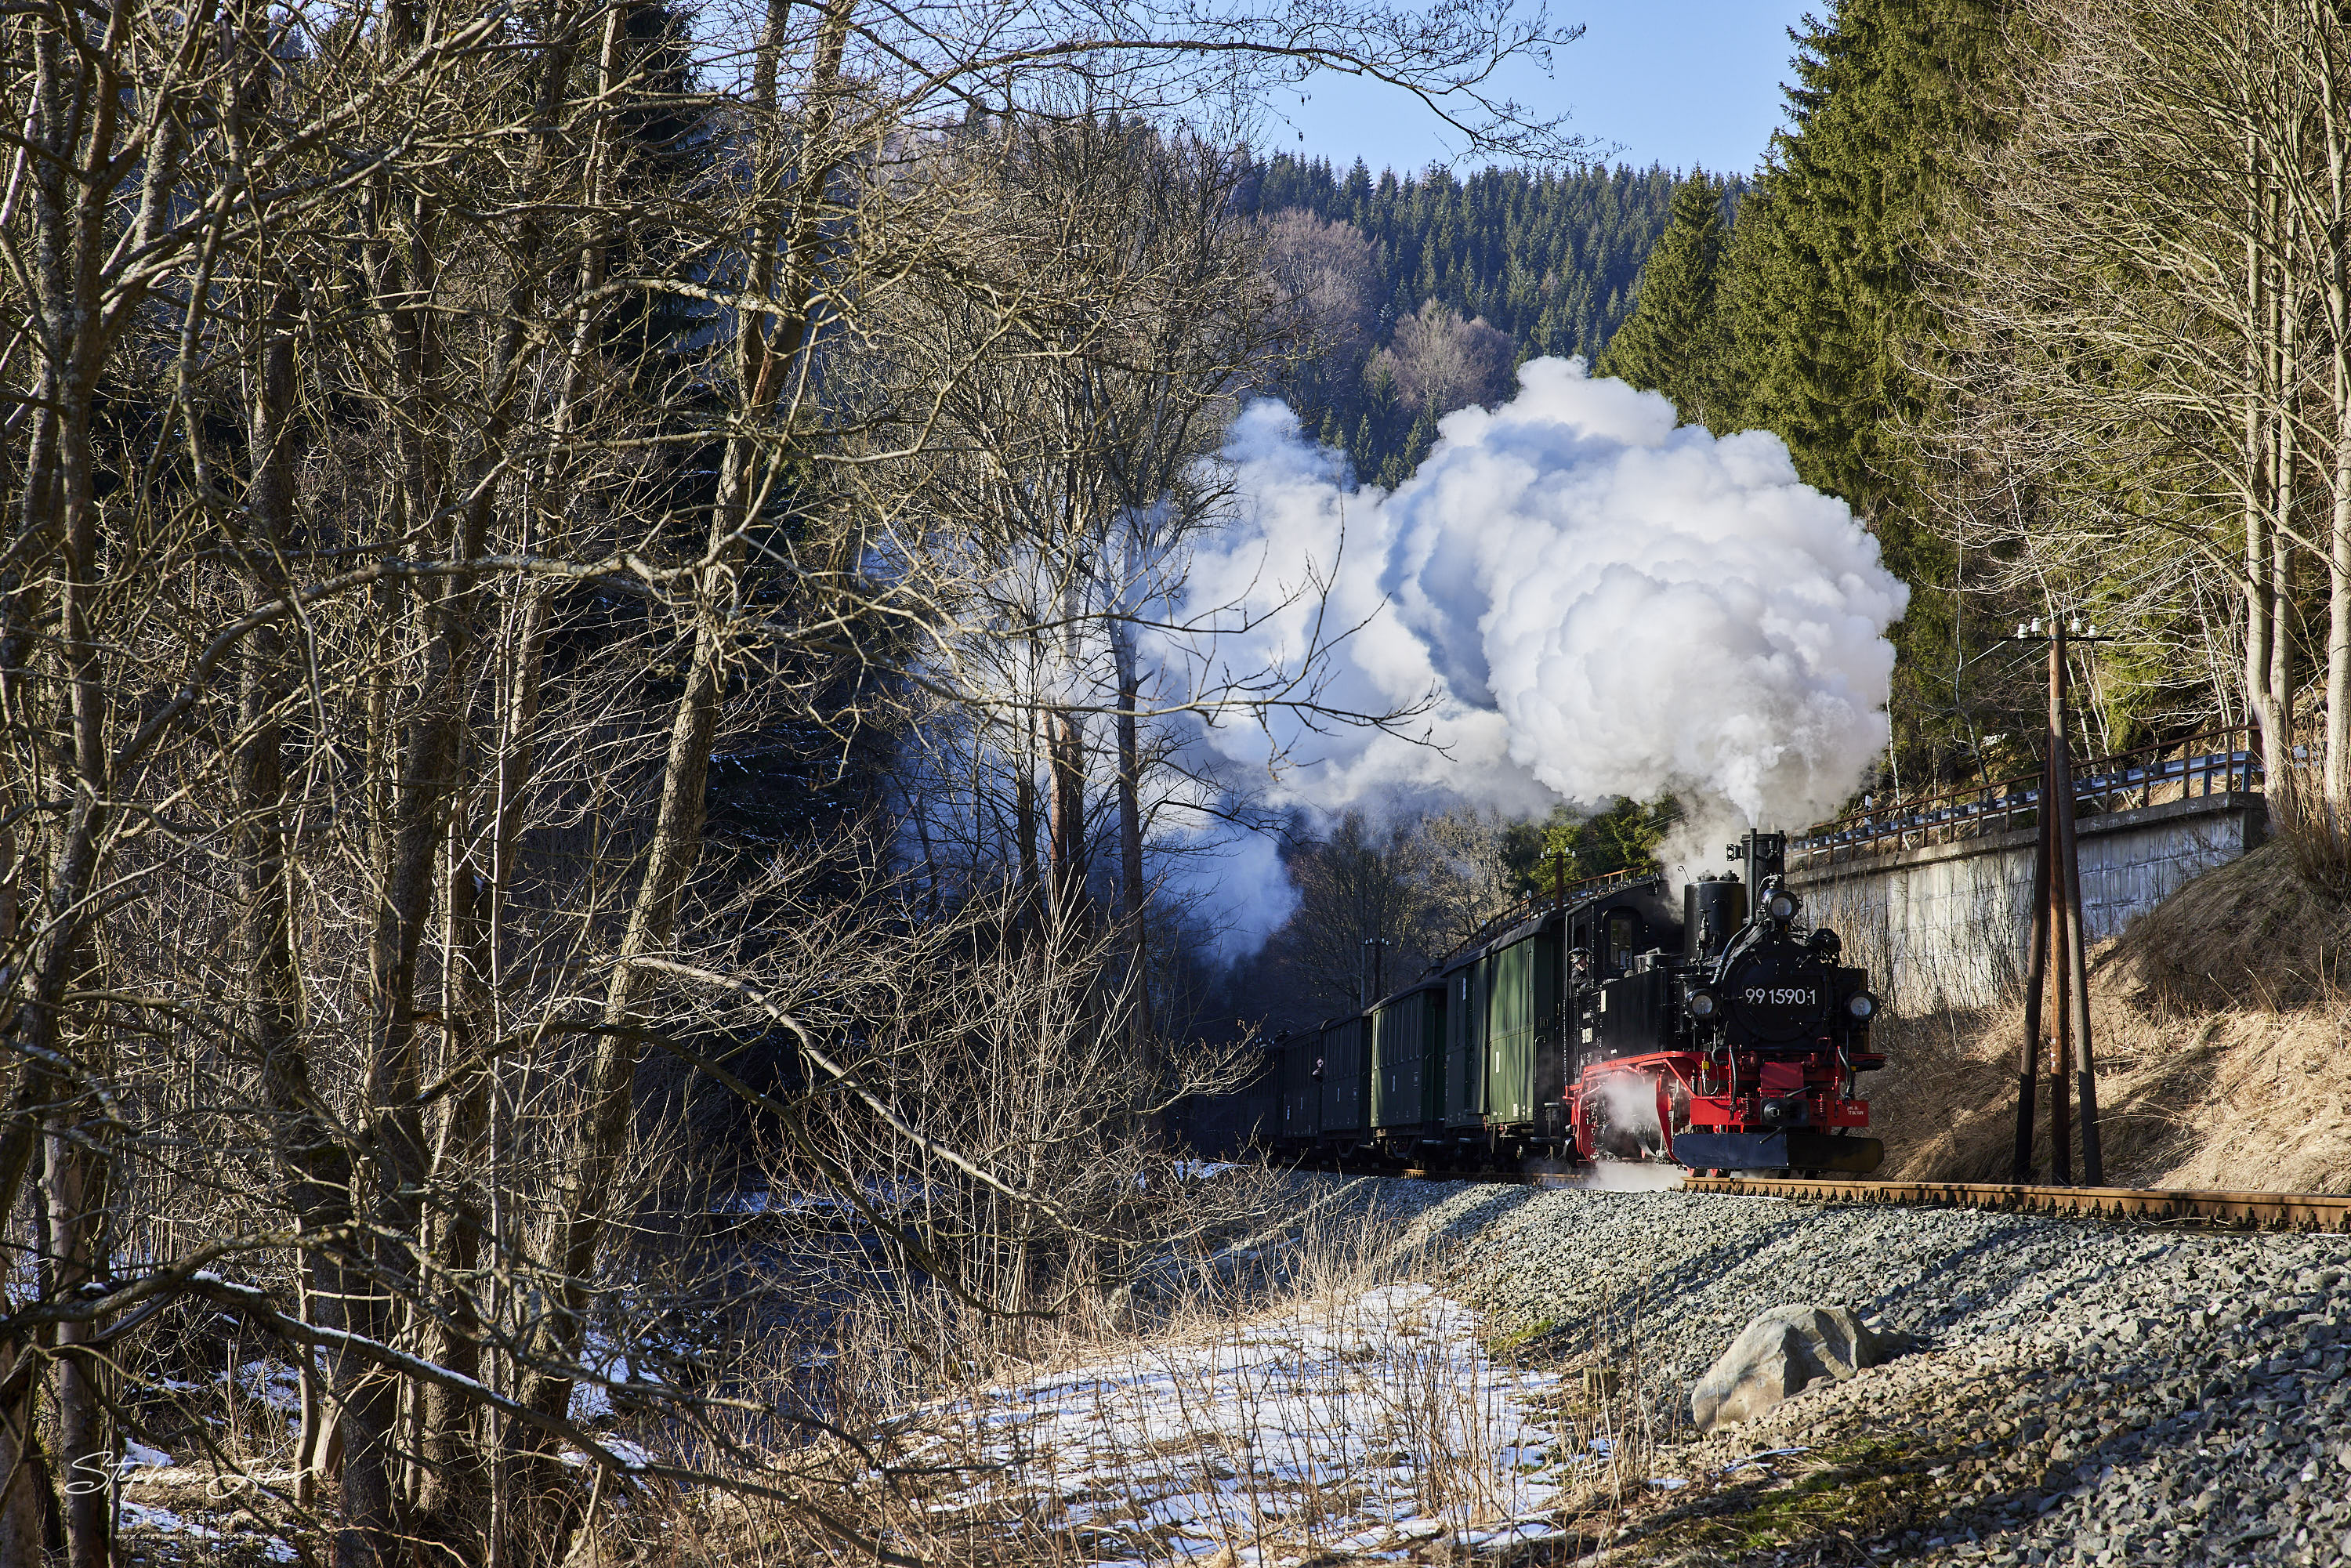 Zug 14115 mit Lok 99 1590-1 kurz vor dem Haltepunkt Forellenhof